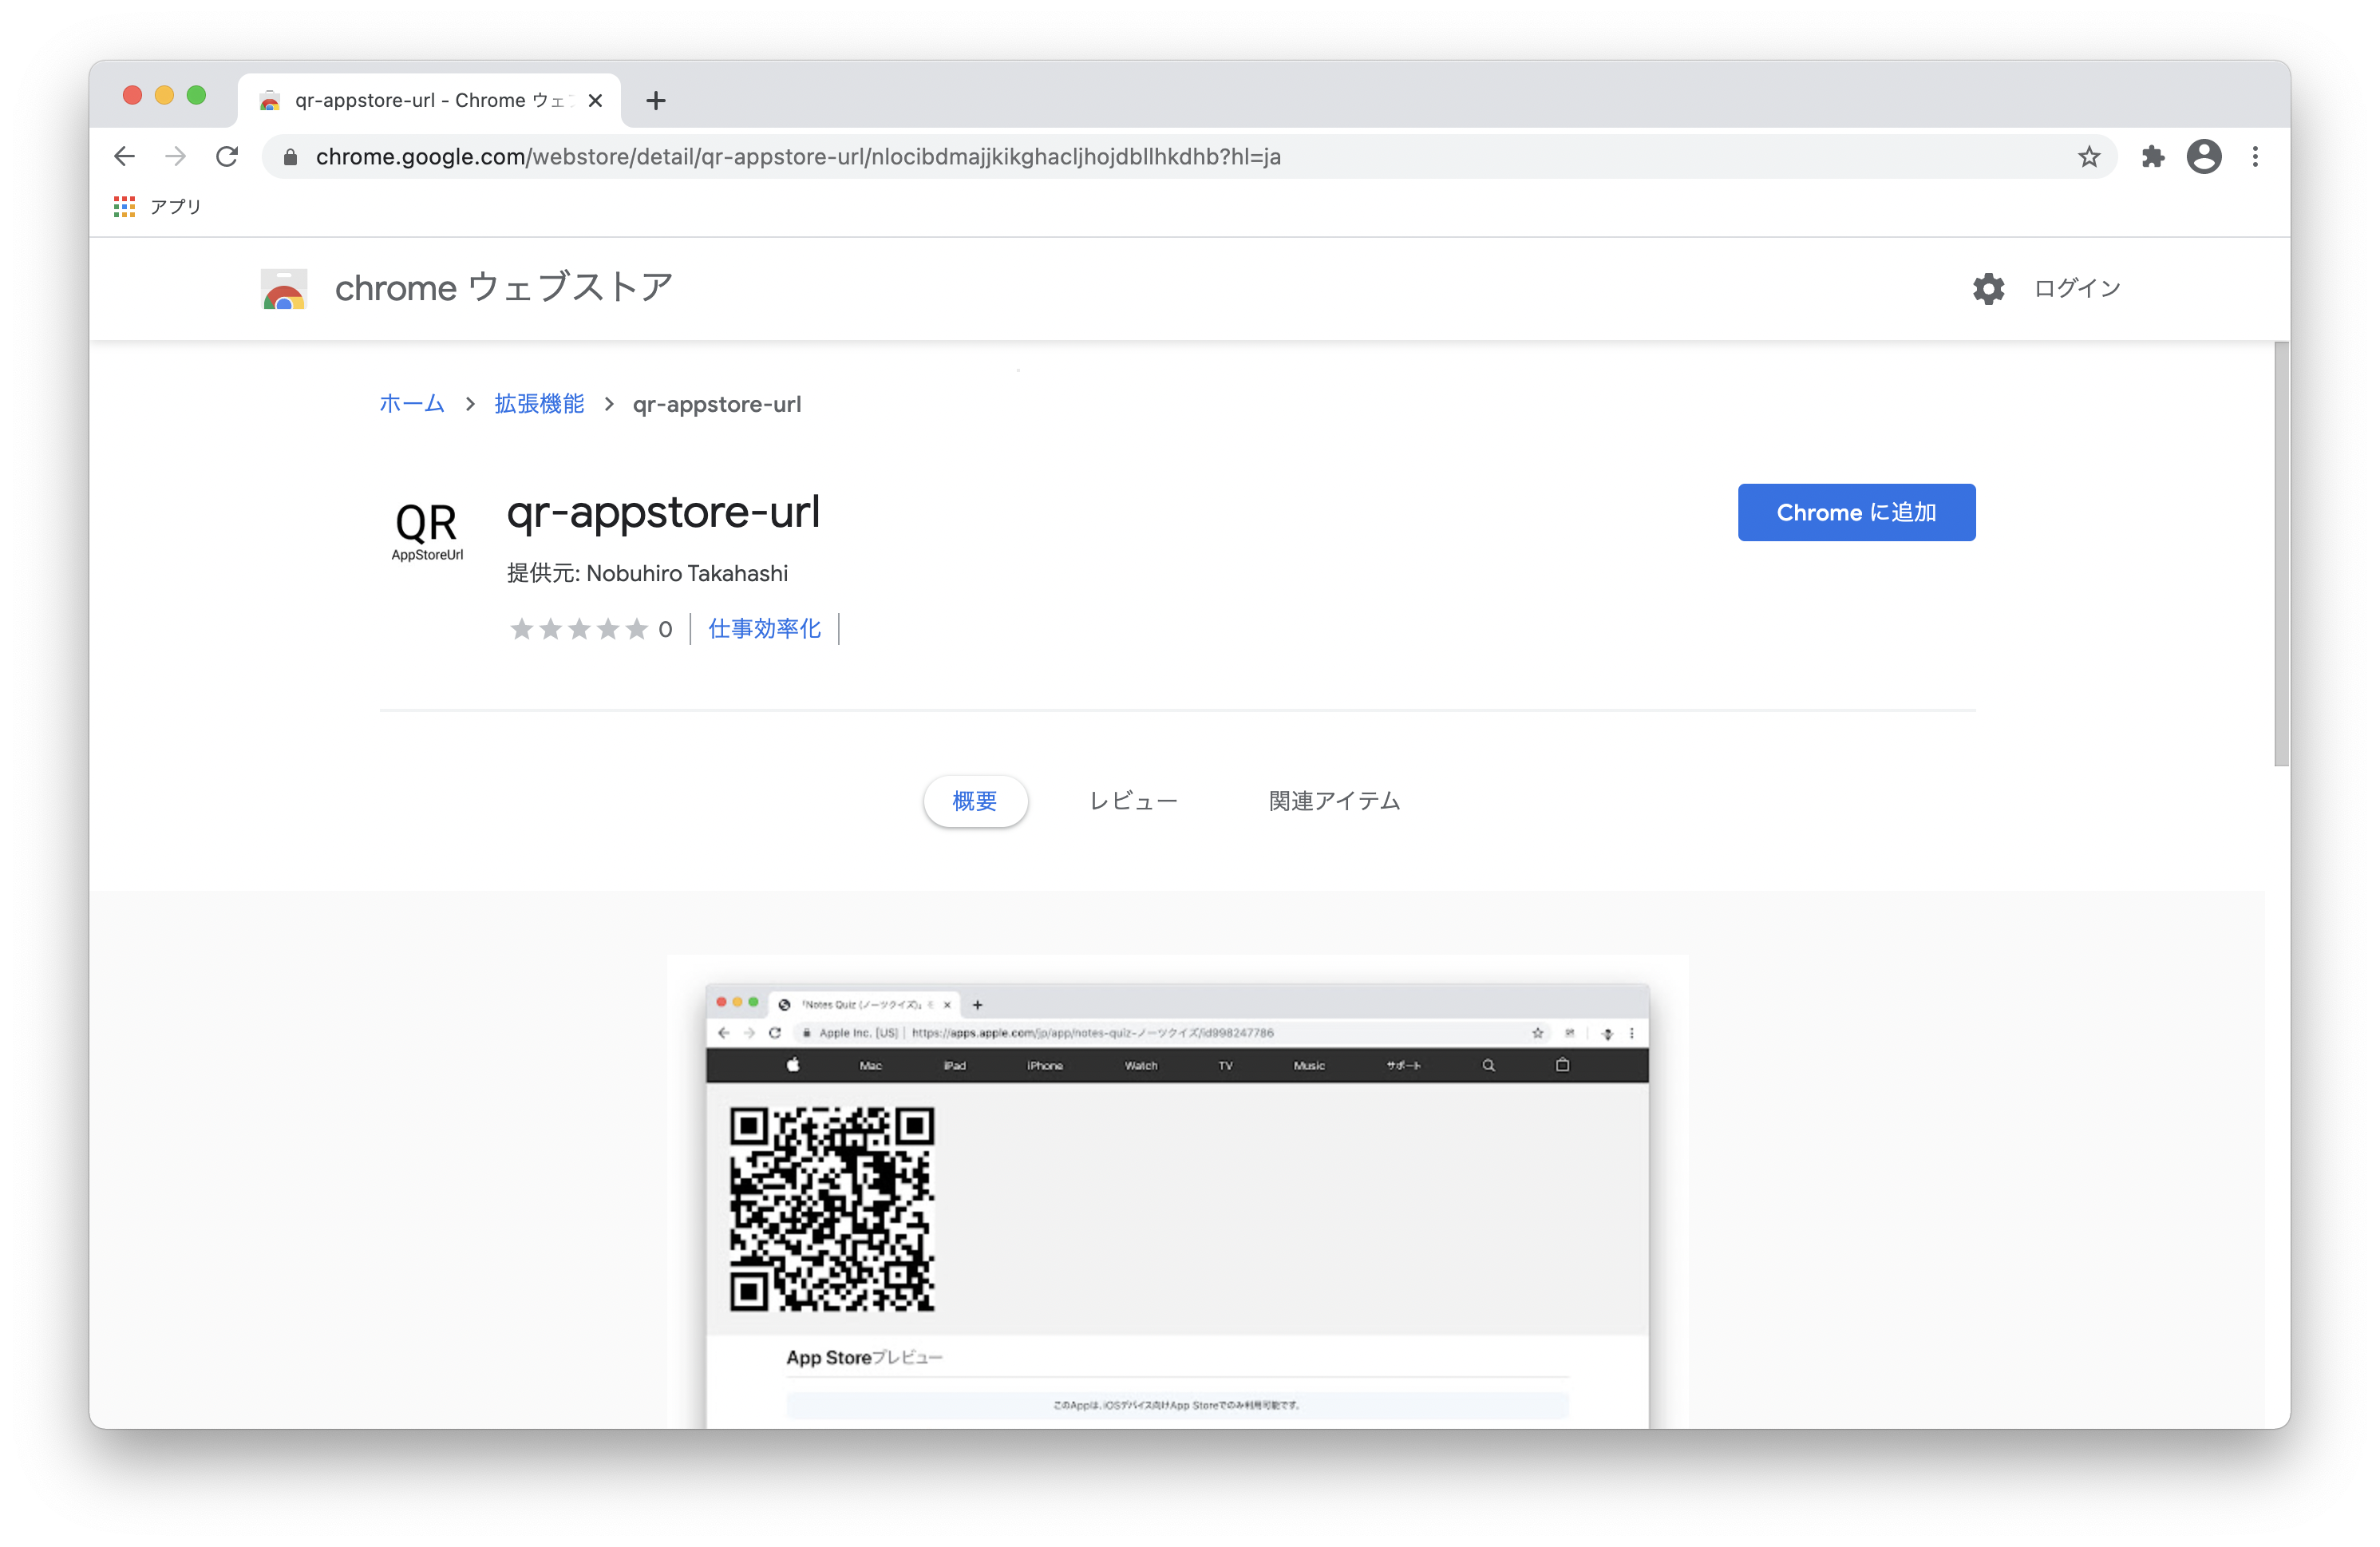 Chrome Extension「qr-appstore-url」を公開しました